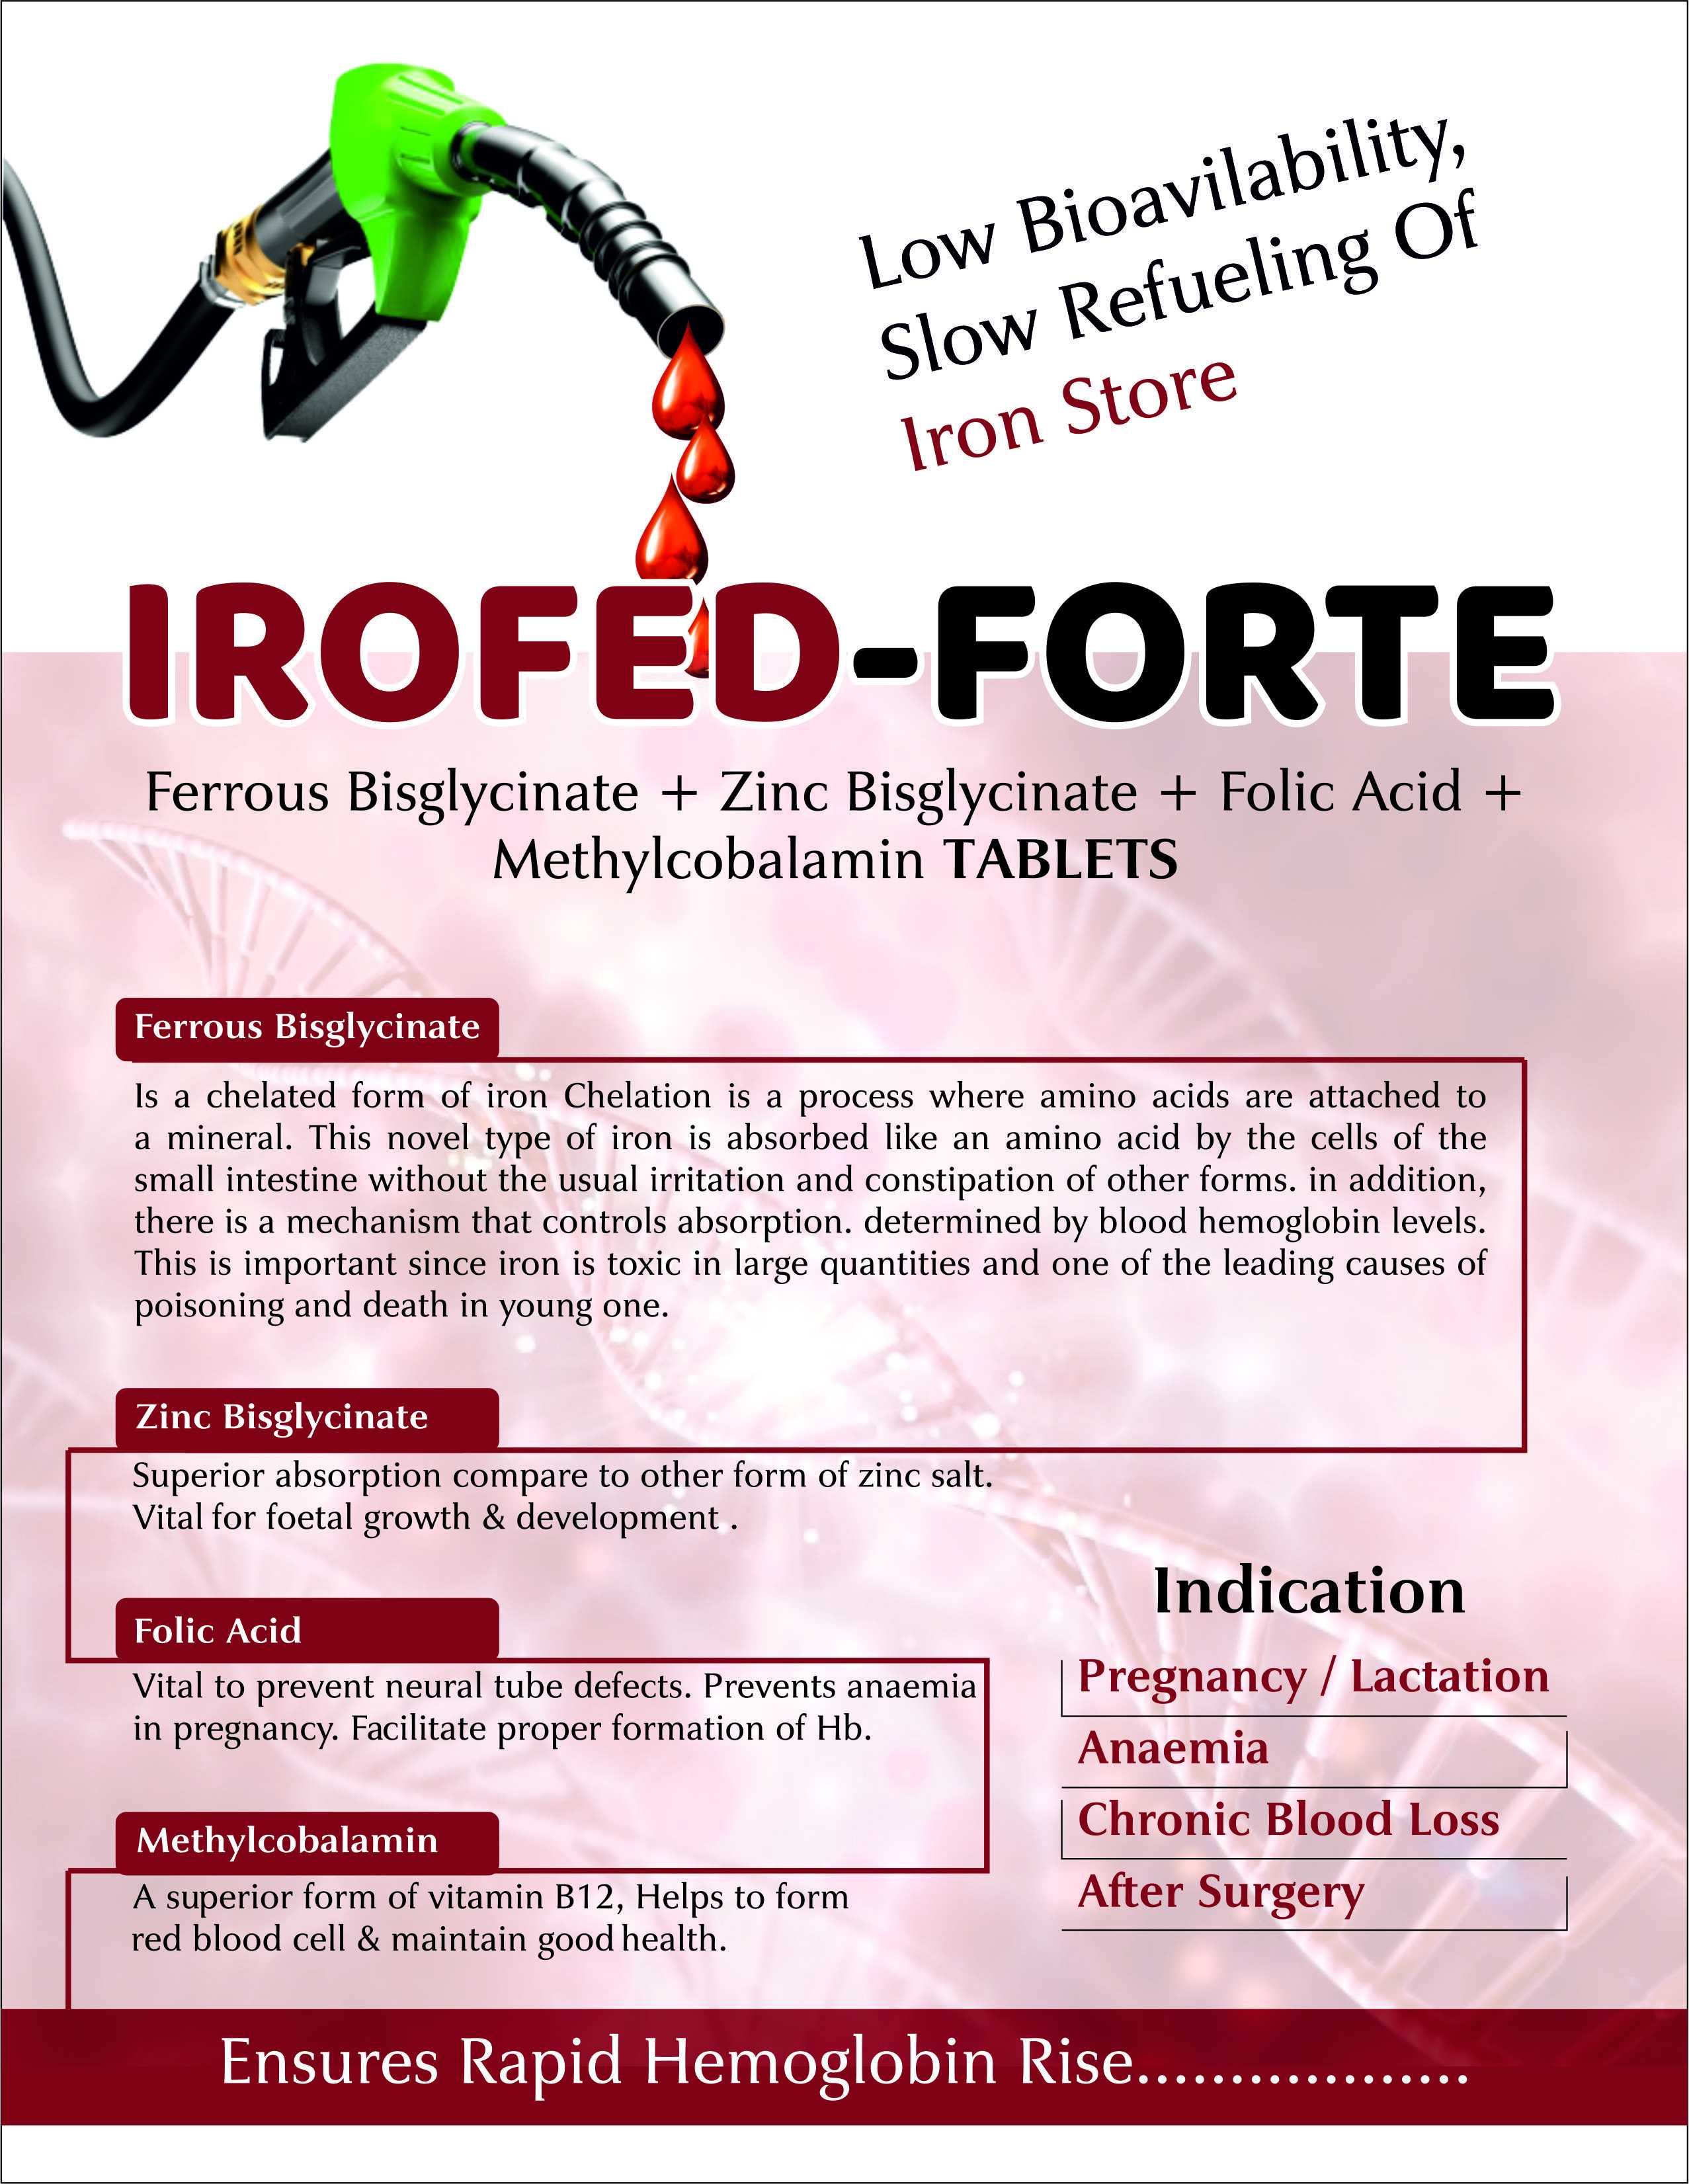 IROFED-FORTE